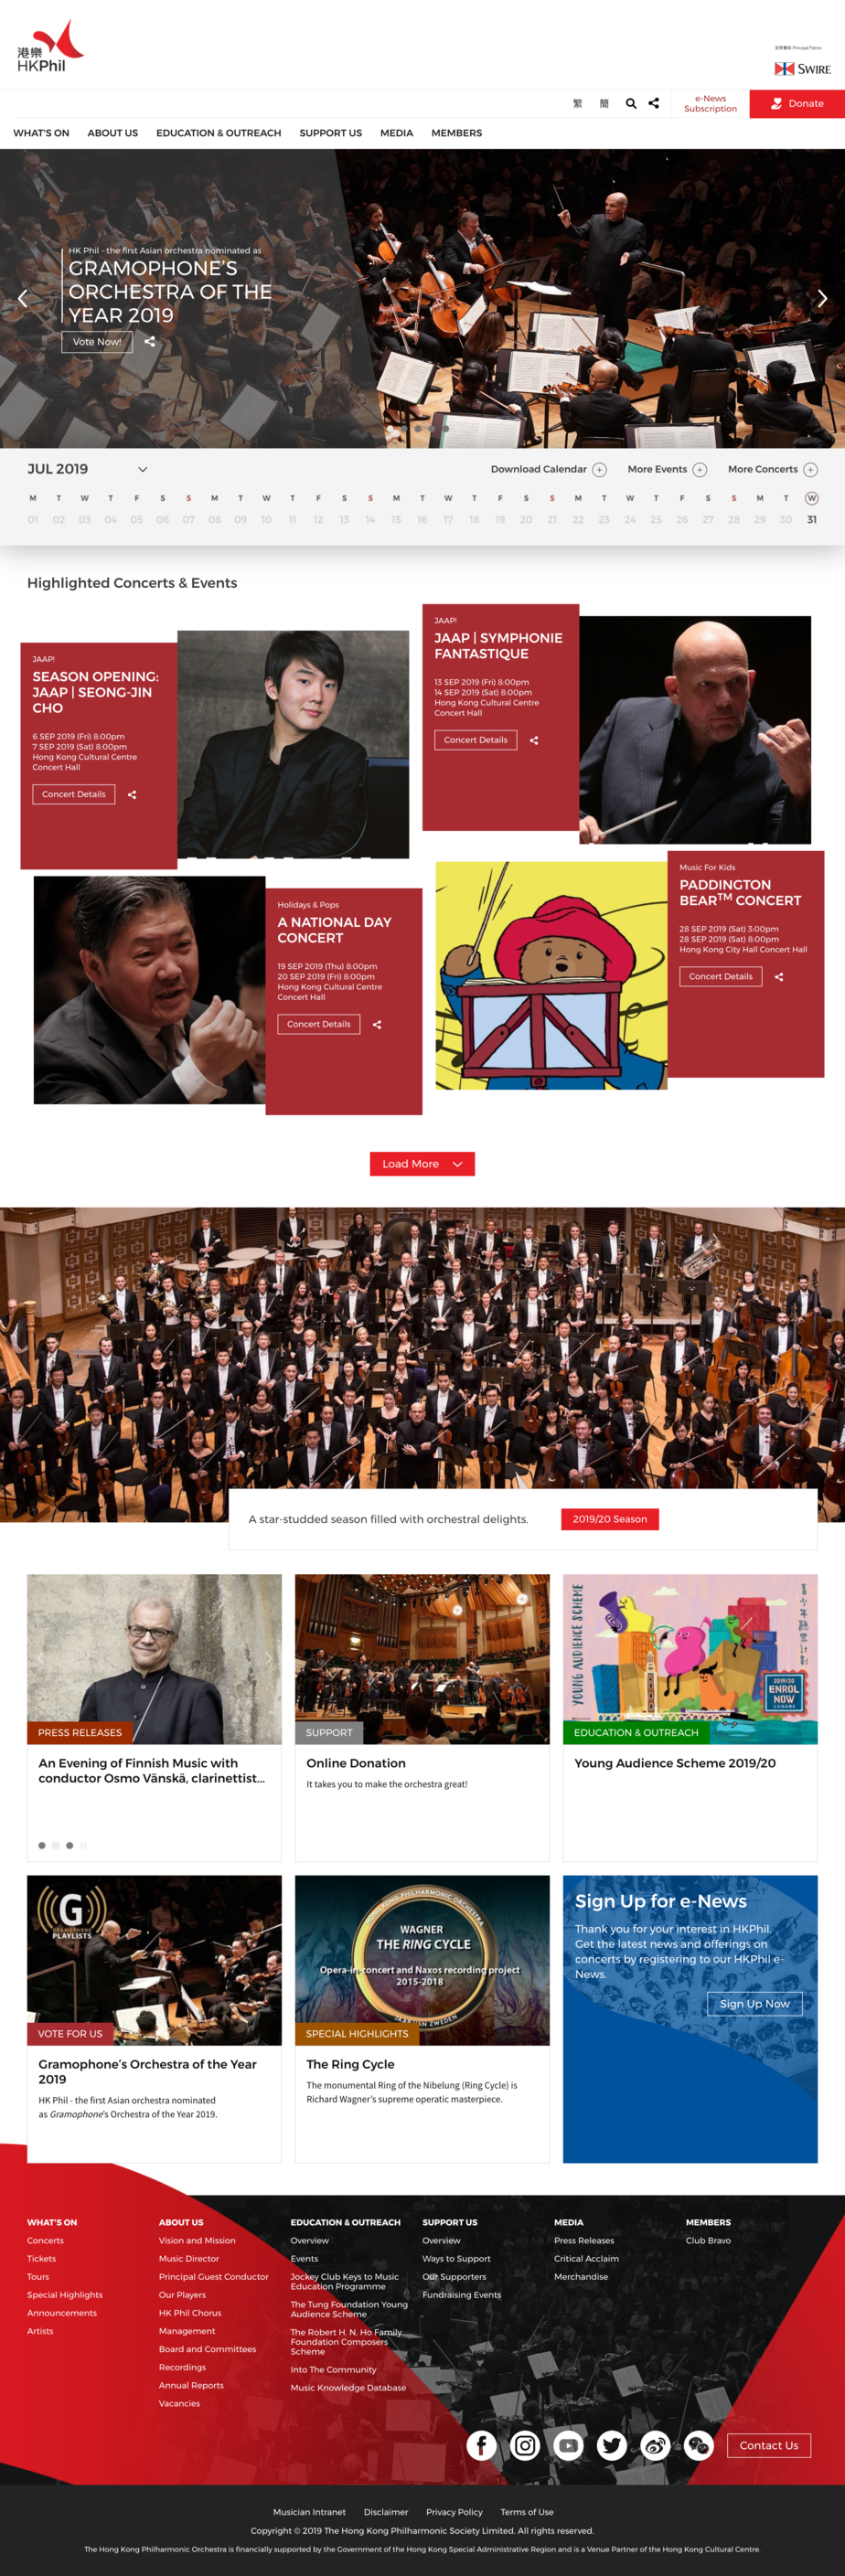 Hong Kong Philharmonic  website screenshot for desktop version 1 of 5